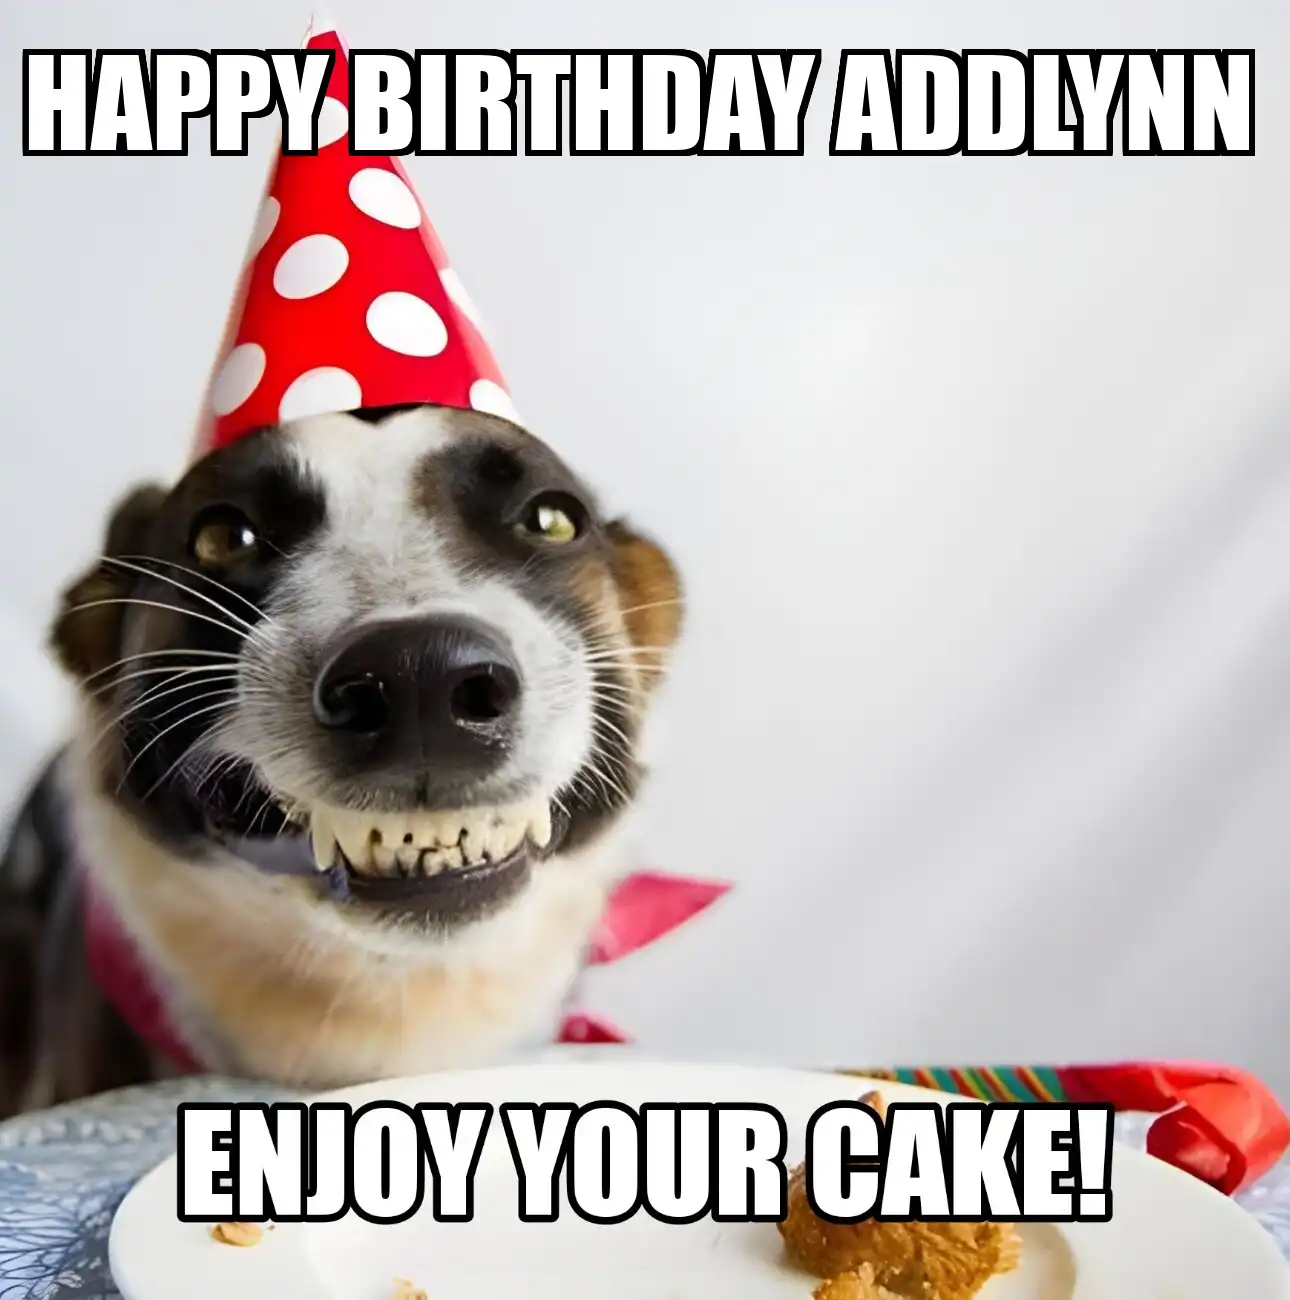 Happy Birthday Addlynn Enjoy Your Cake Dog Meme